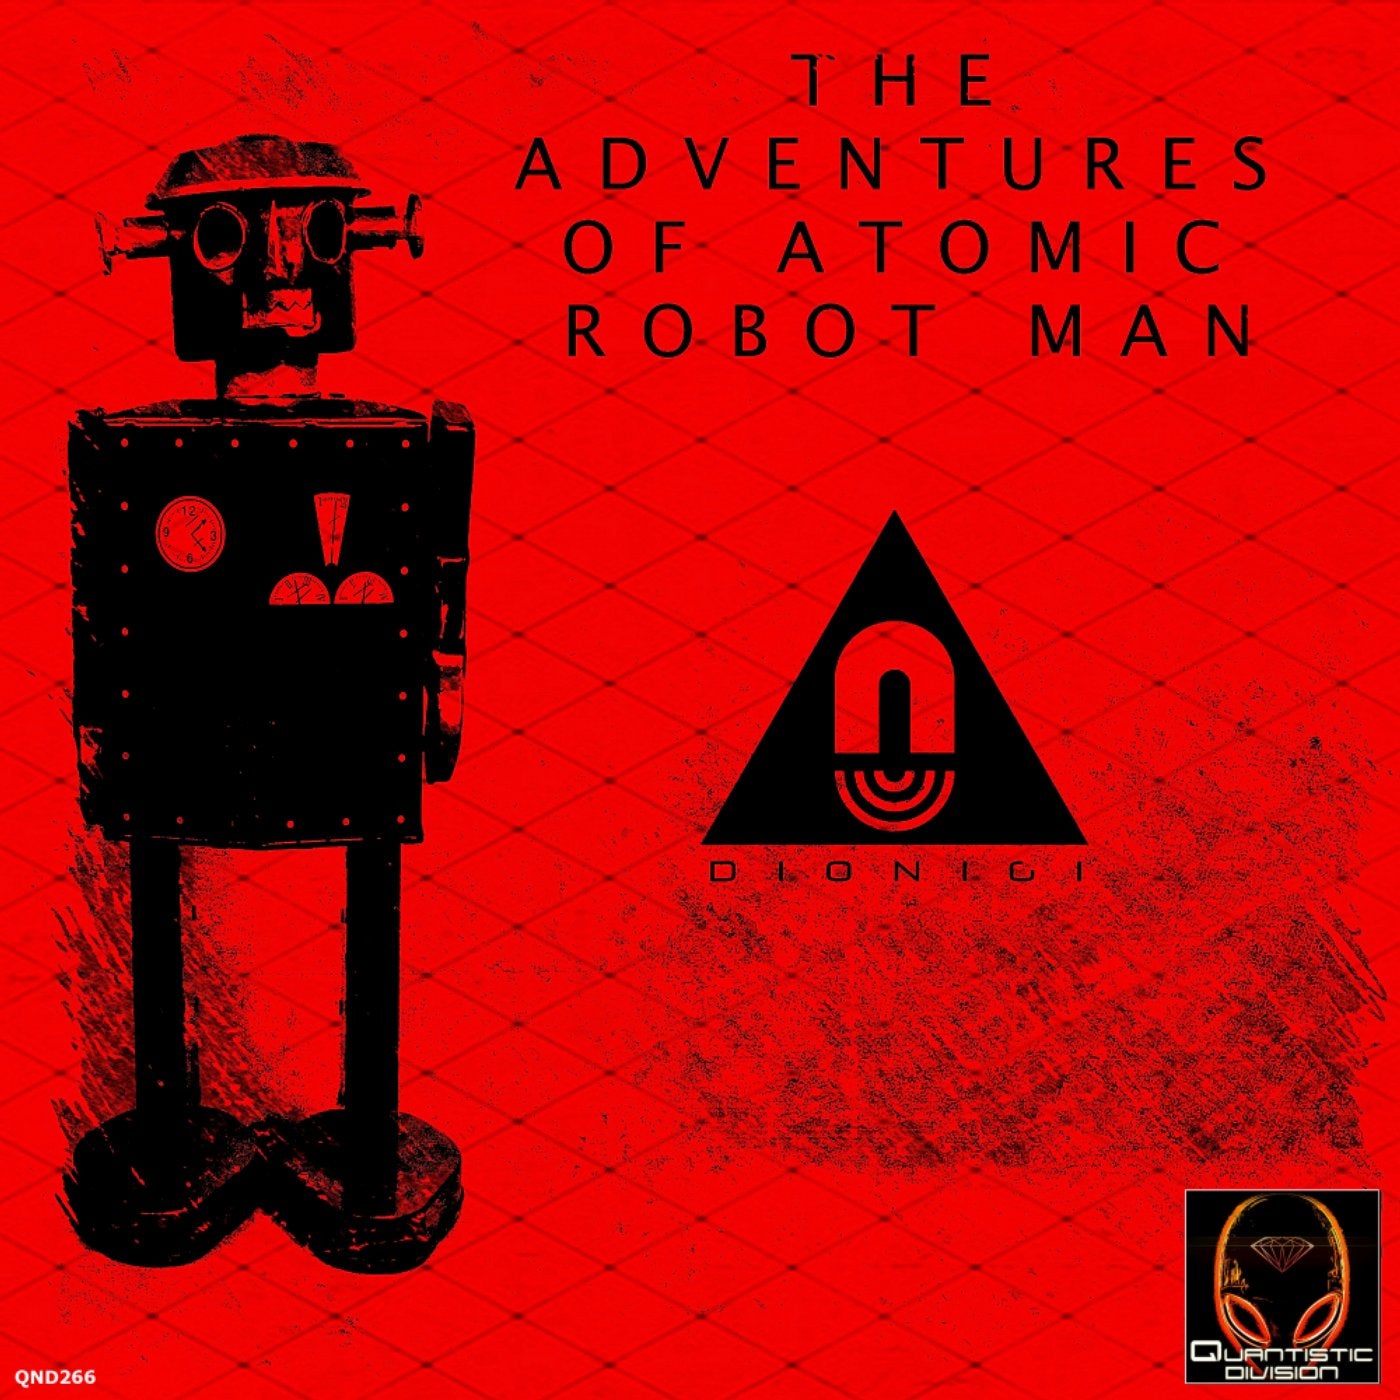 The Adventures of Atomic Robot Man